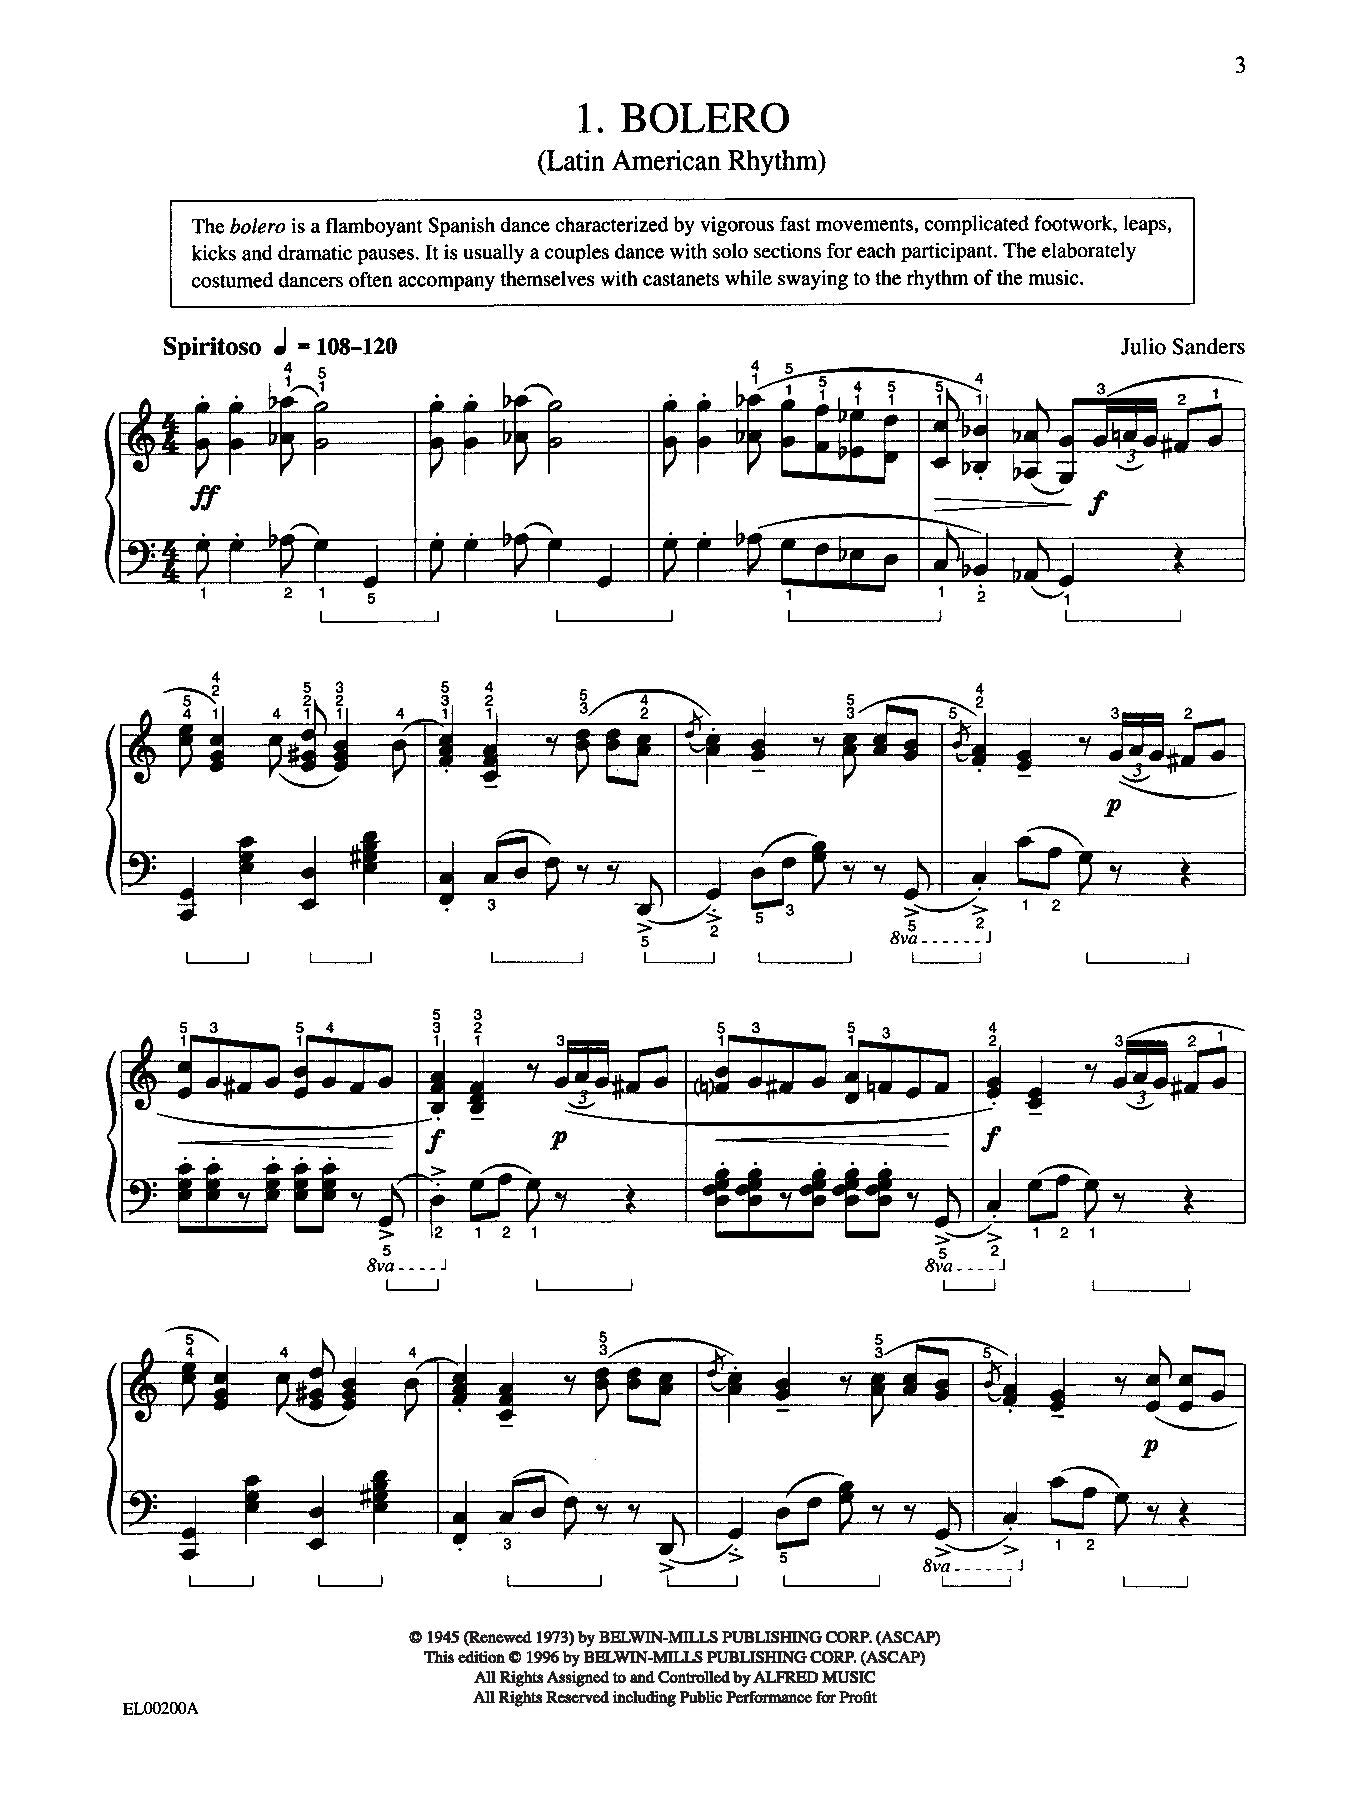 Schaum Piano Course, G - The Amber Book